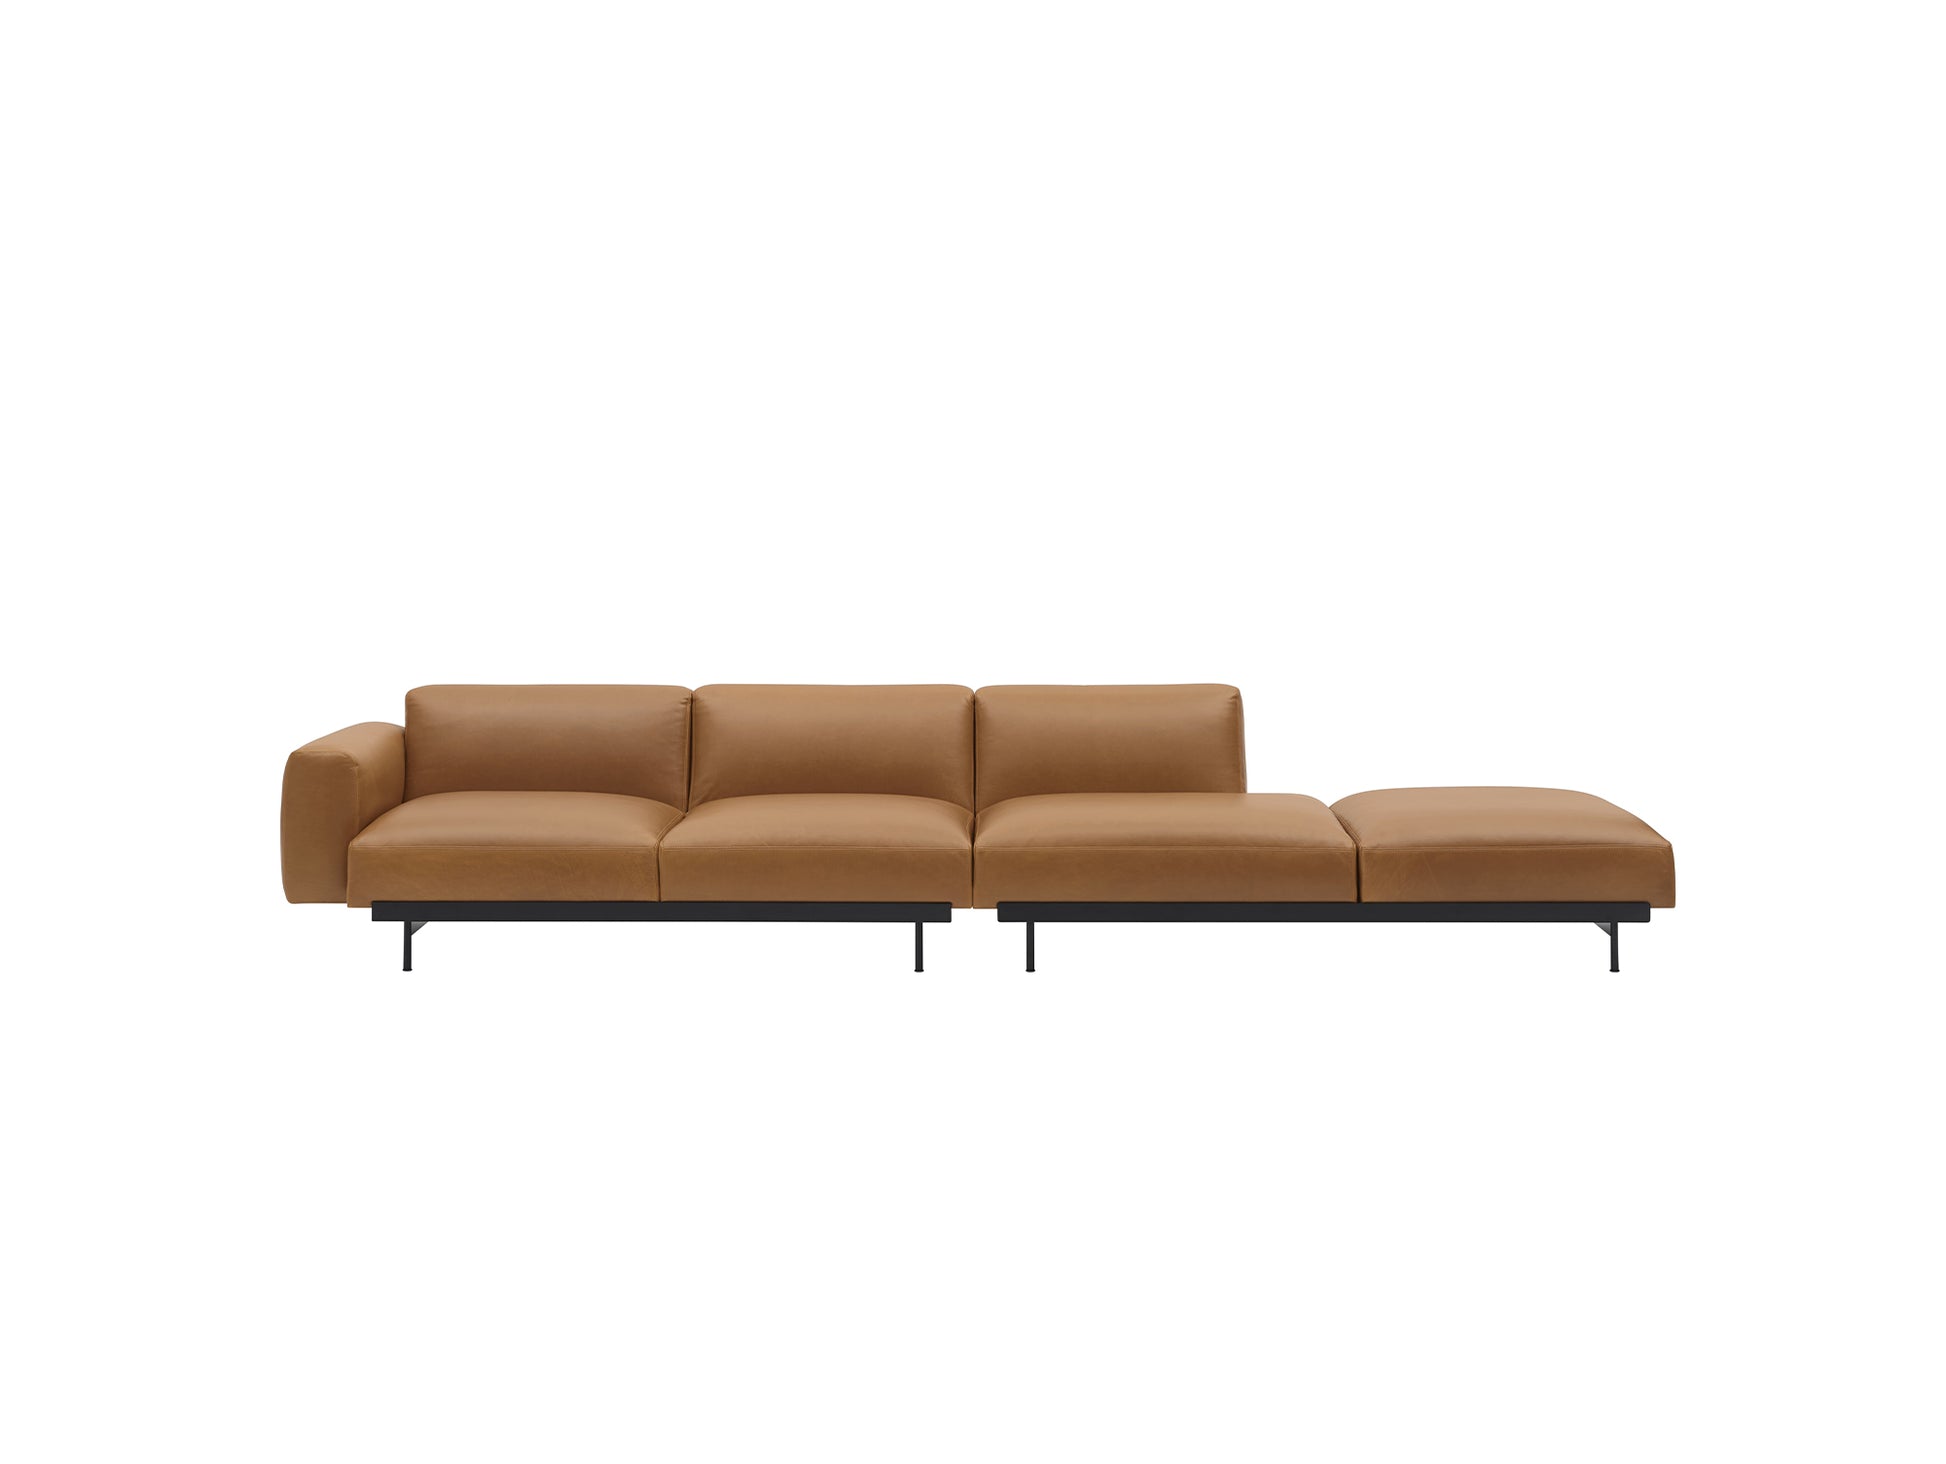 In Situ 4-Seater Modular Sofa by Muuto - Configuration 3 / Refine leather cognac